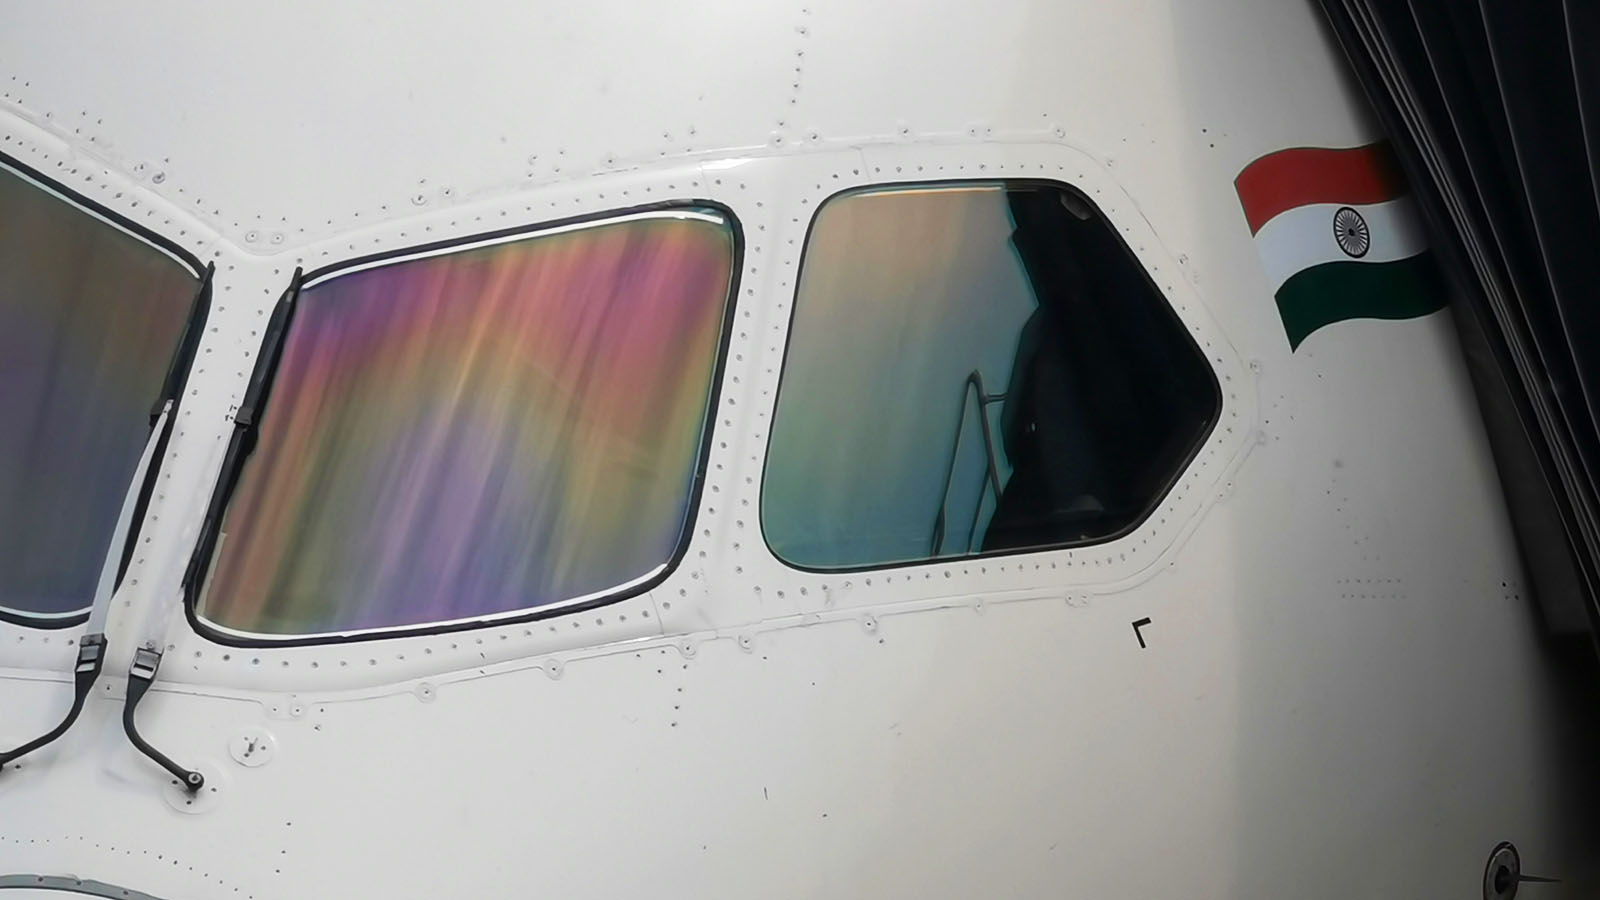 Air India Boeing 787 cockpit windows